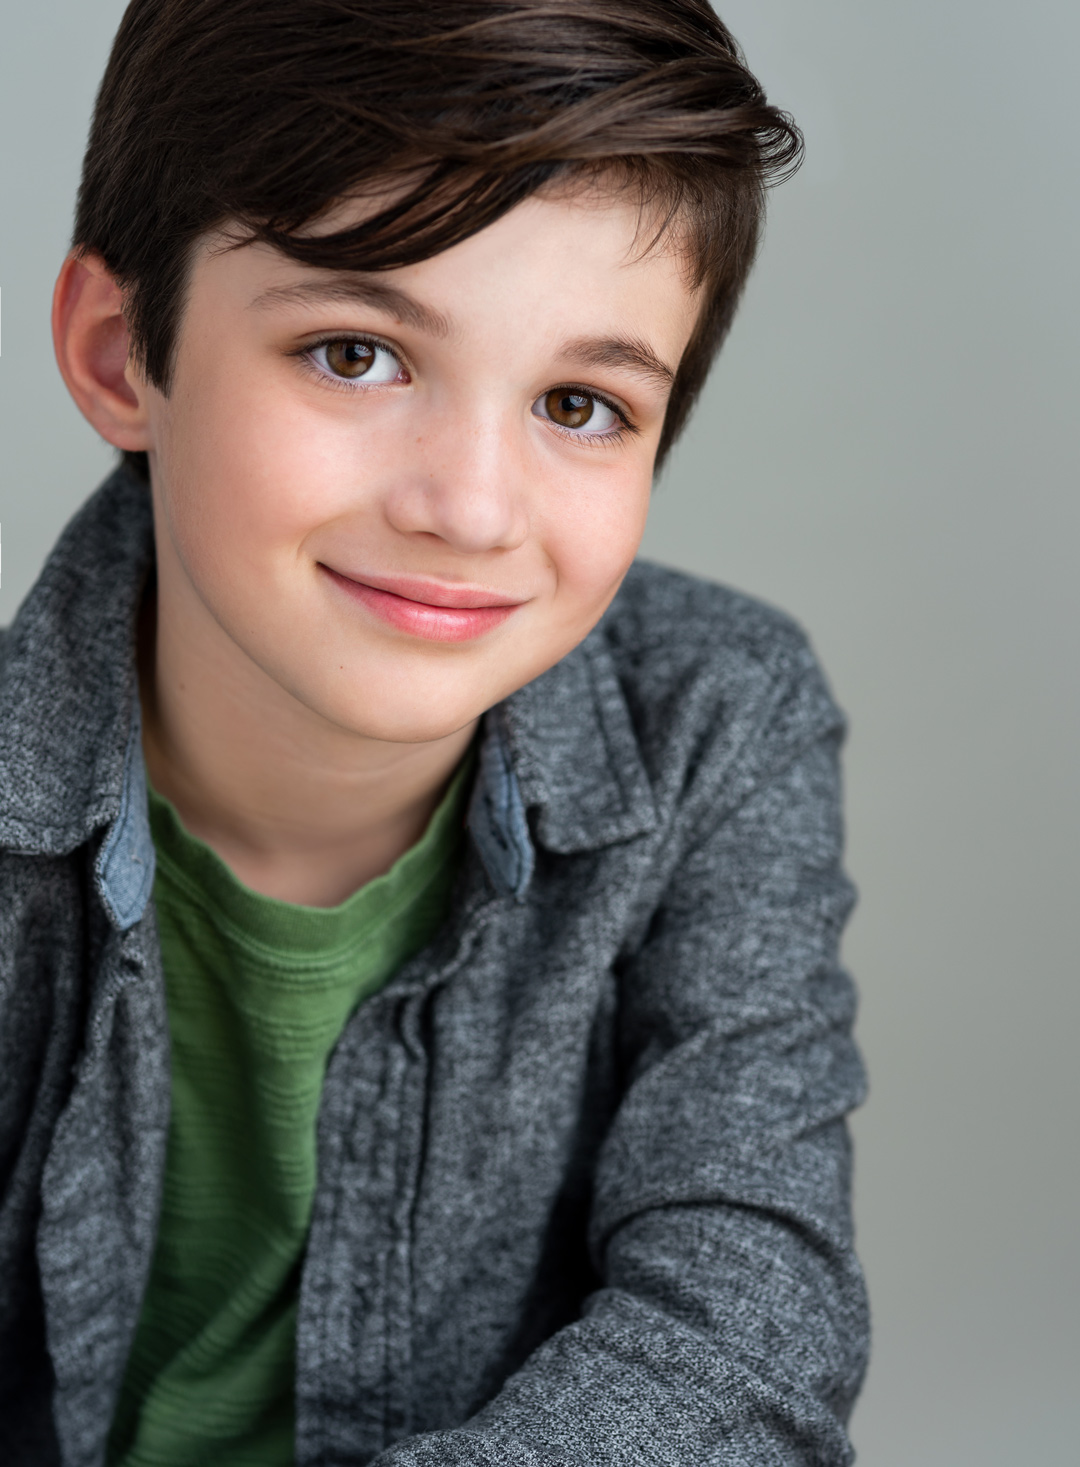 Disney young actor headshot Matteo Bolognese